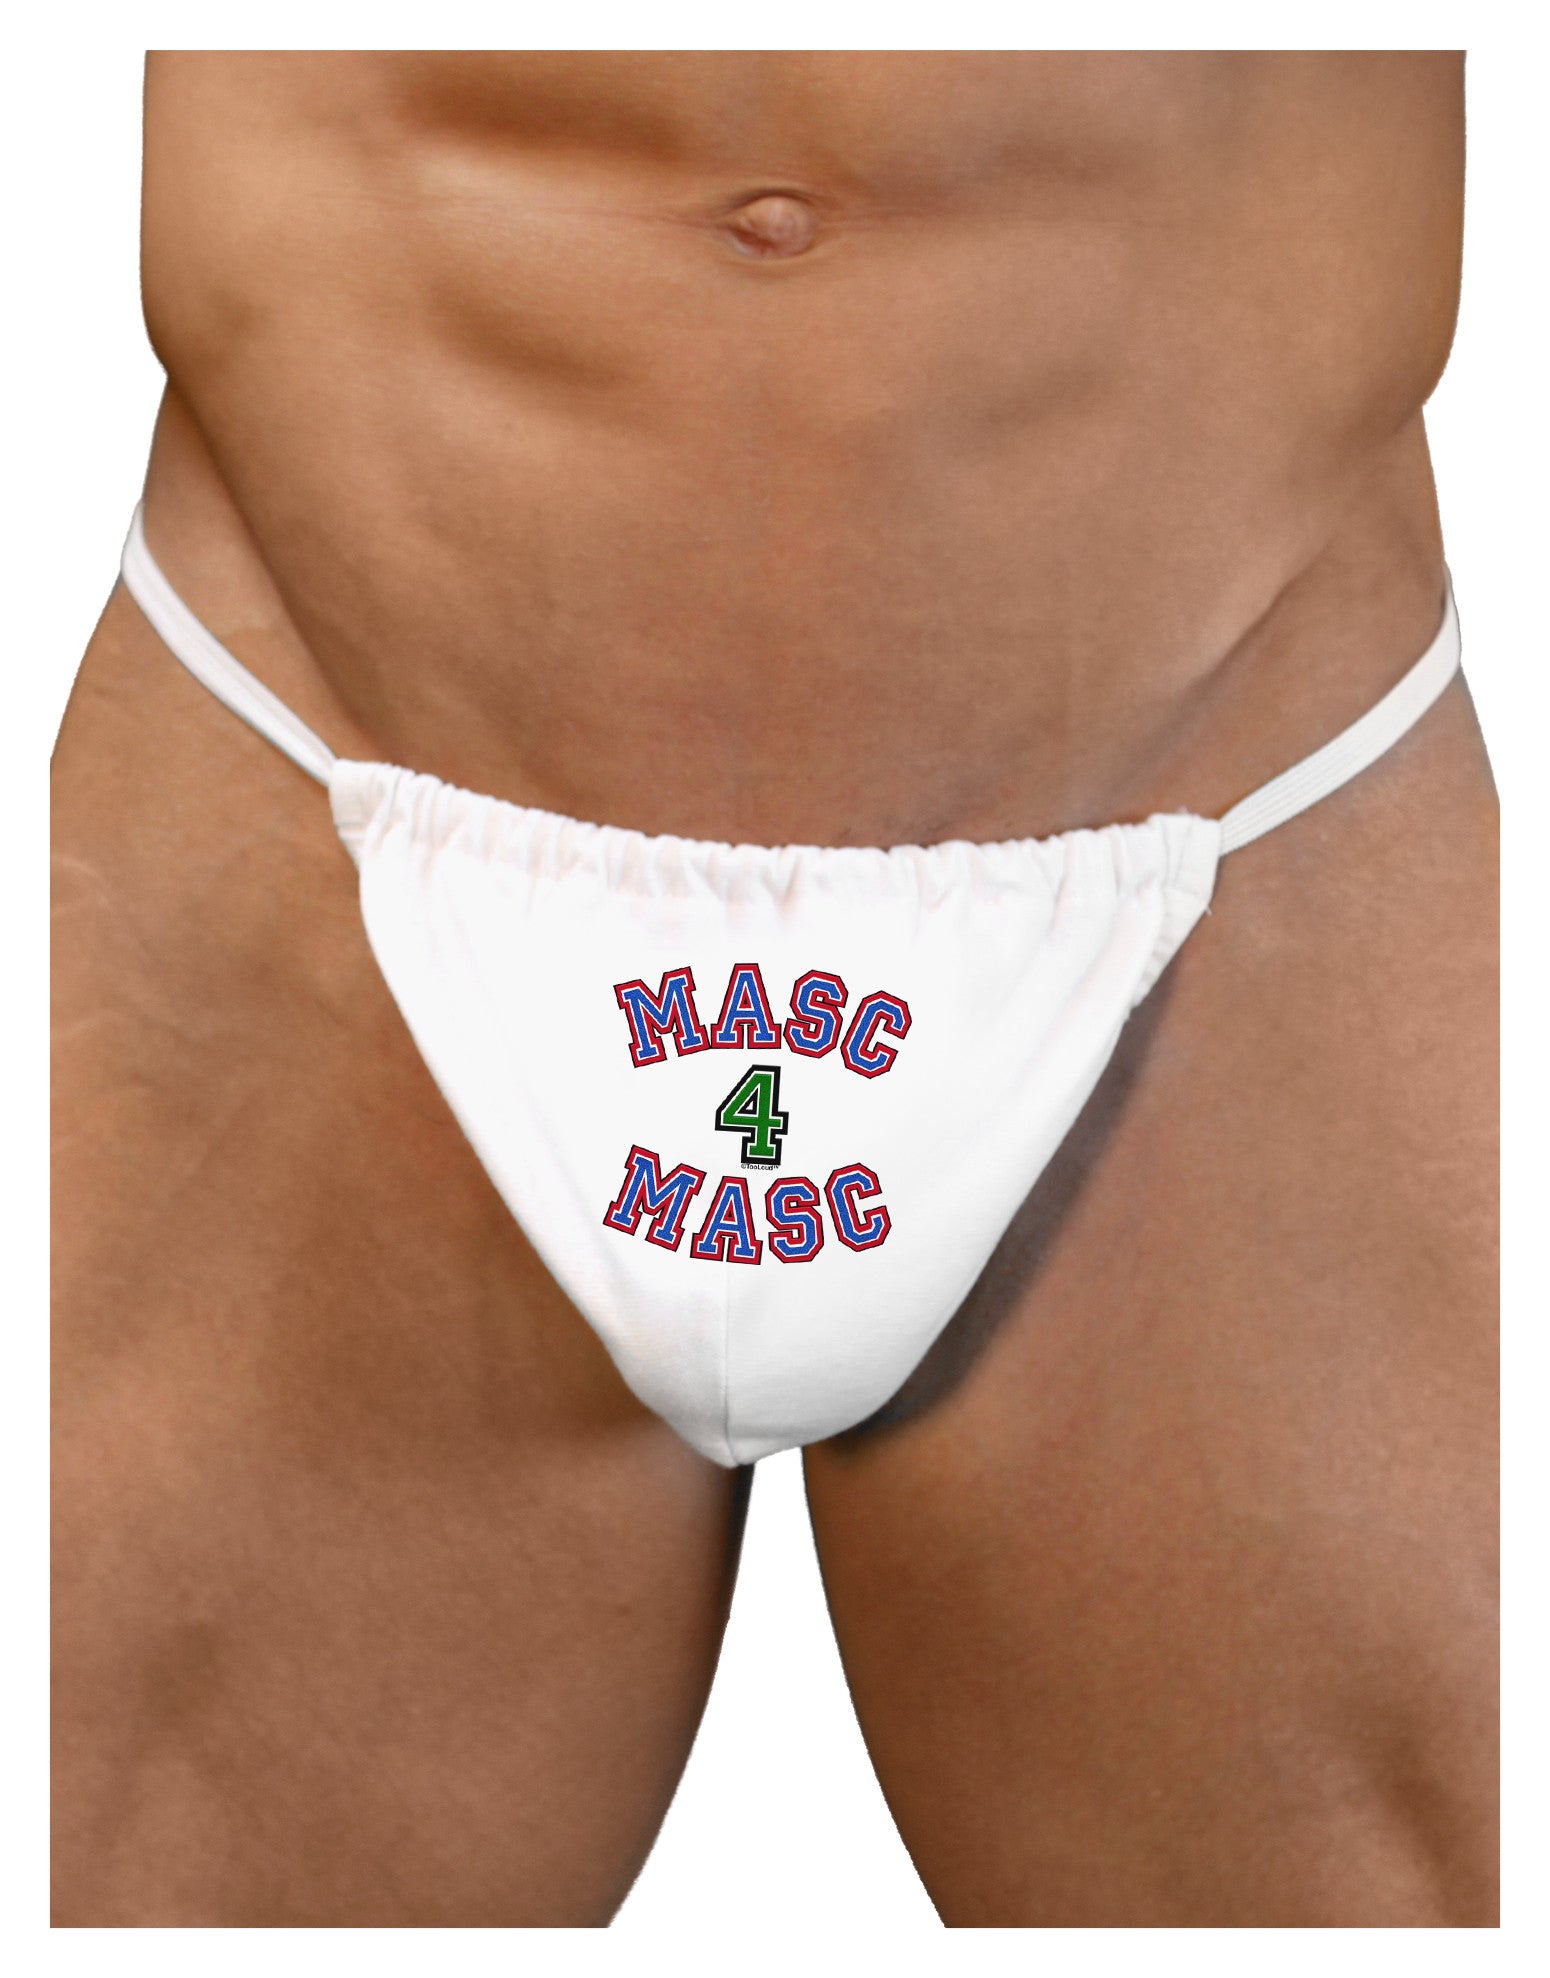 Masc 4 Masc College Stud Mens G-String Underwear by LOBBO - Davson Sales